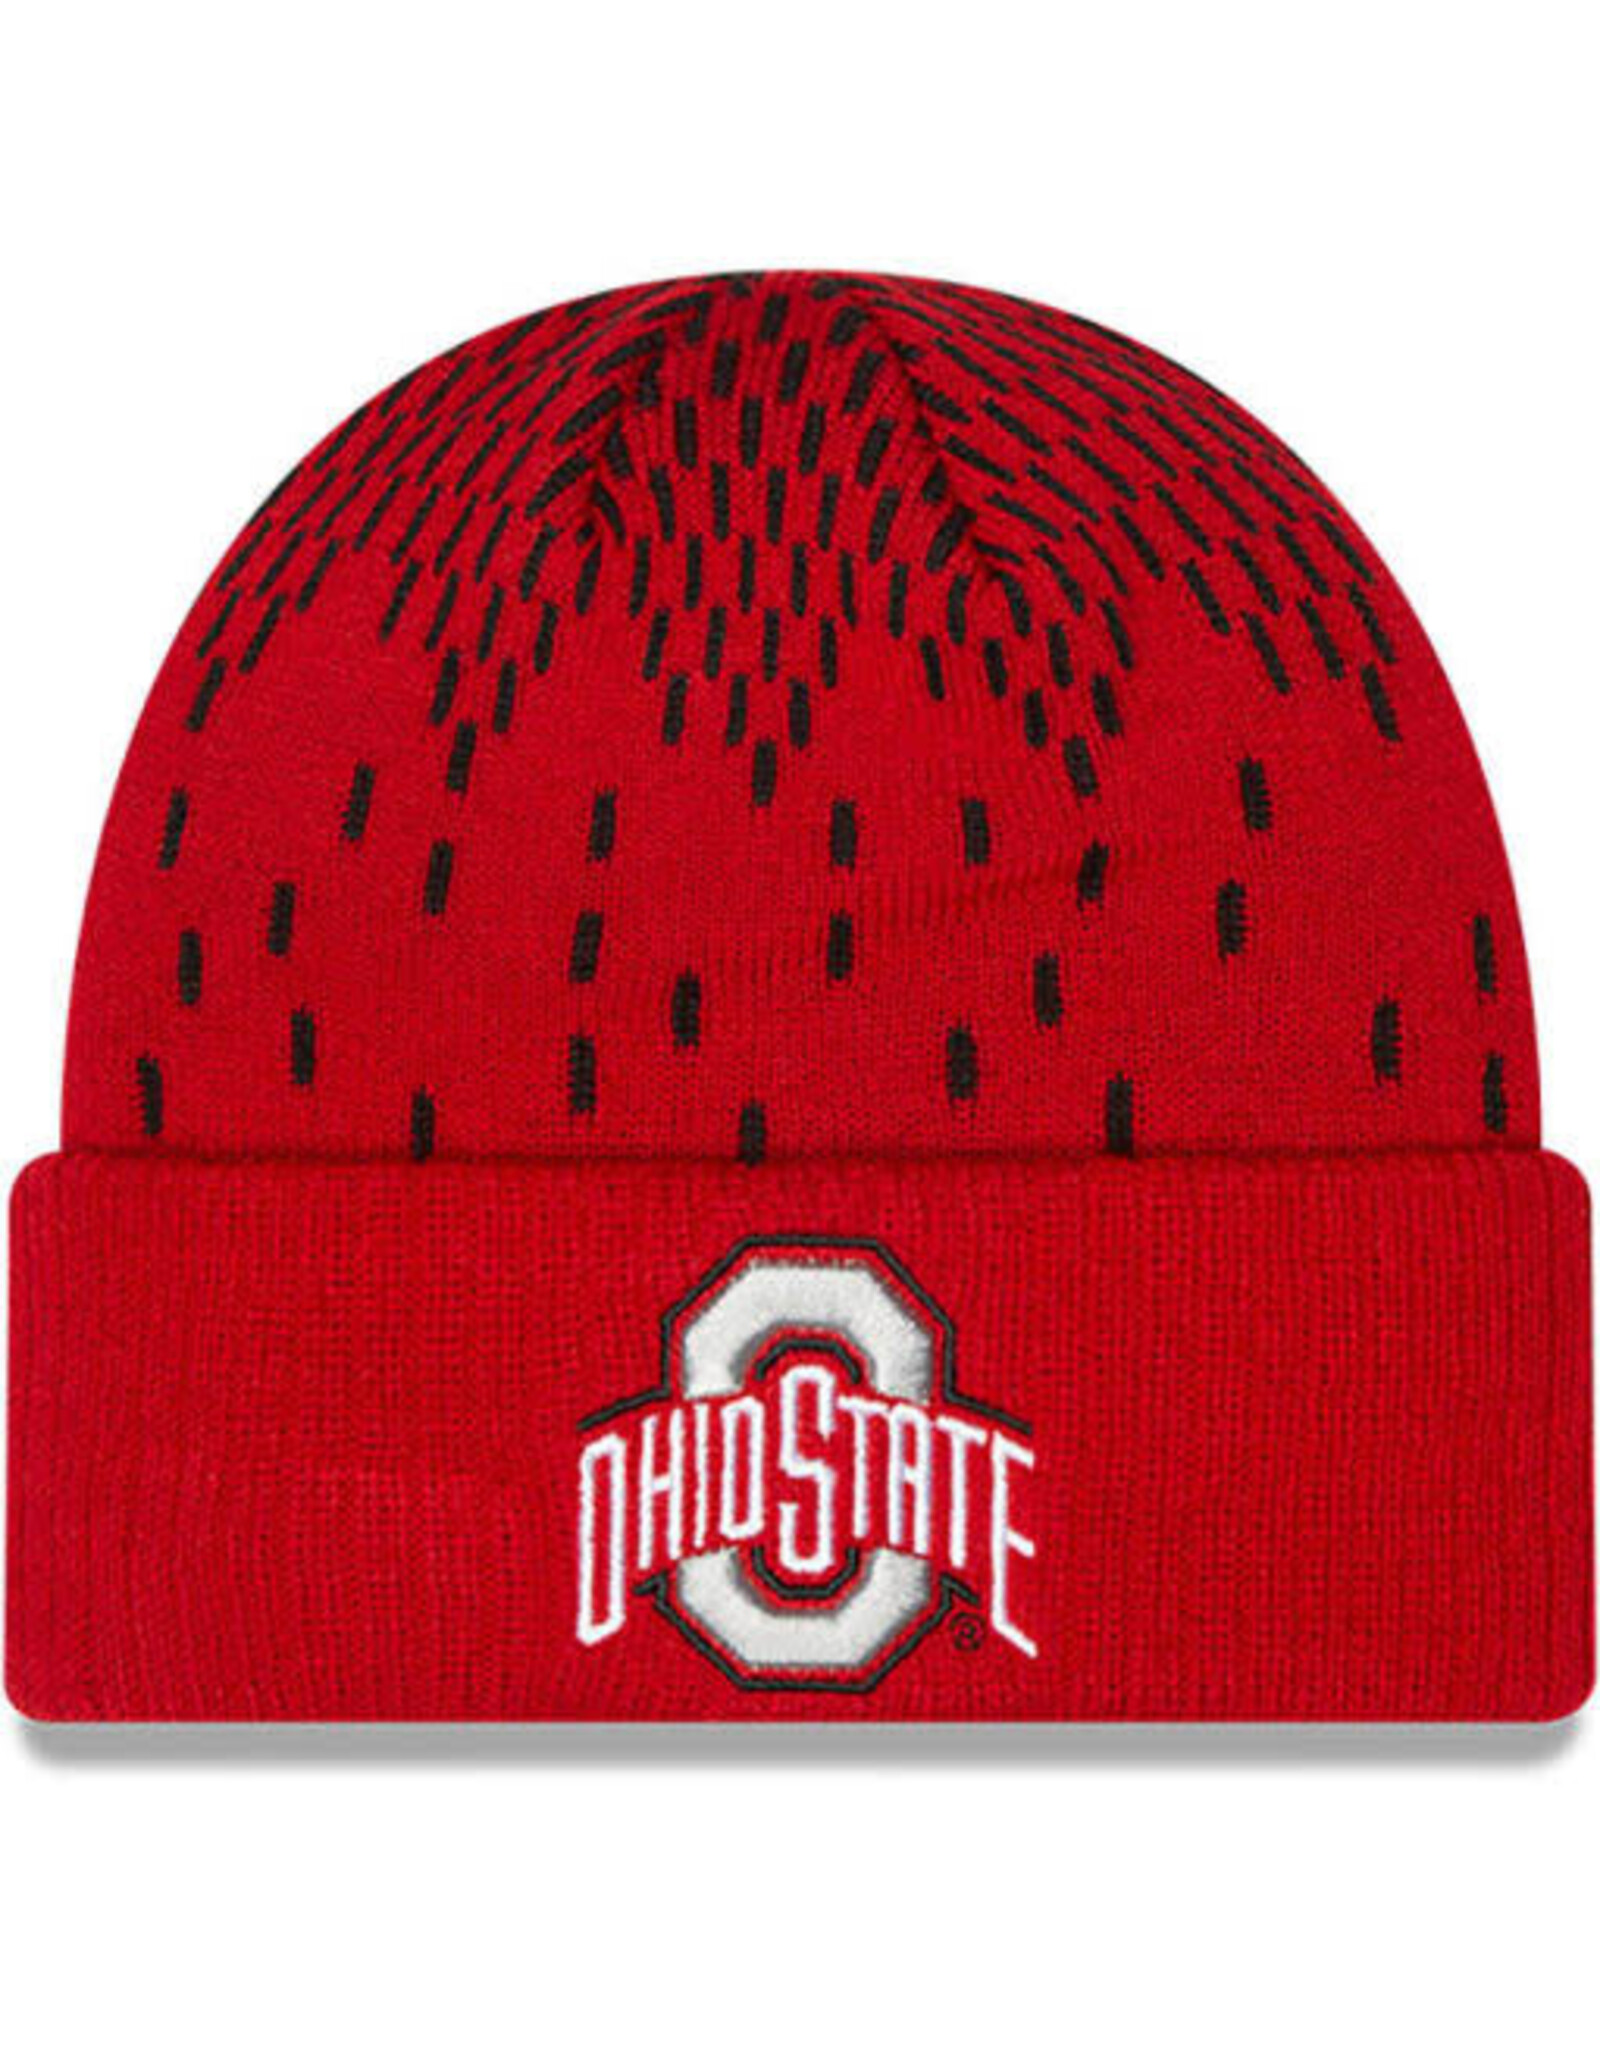 New Era Ohio State Buckeyes Knit Freeze Beanie Hat